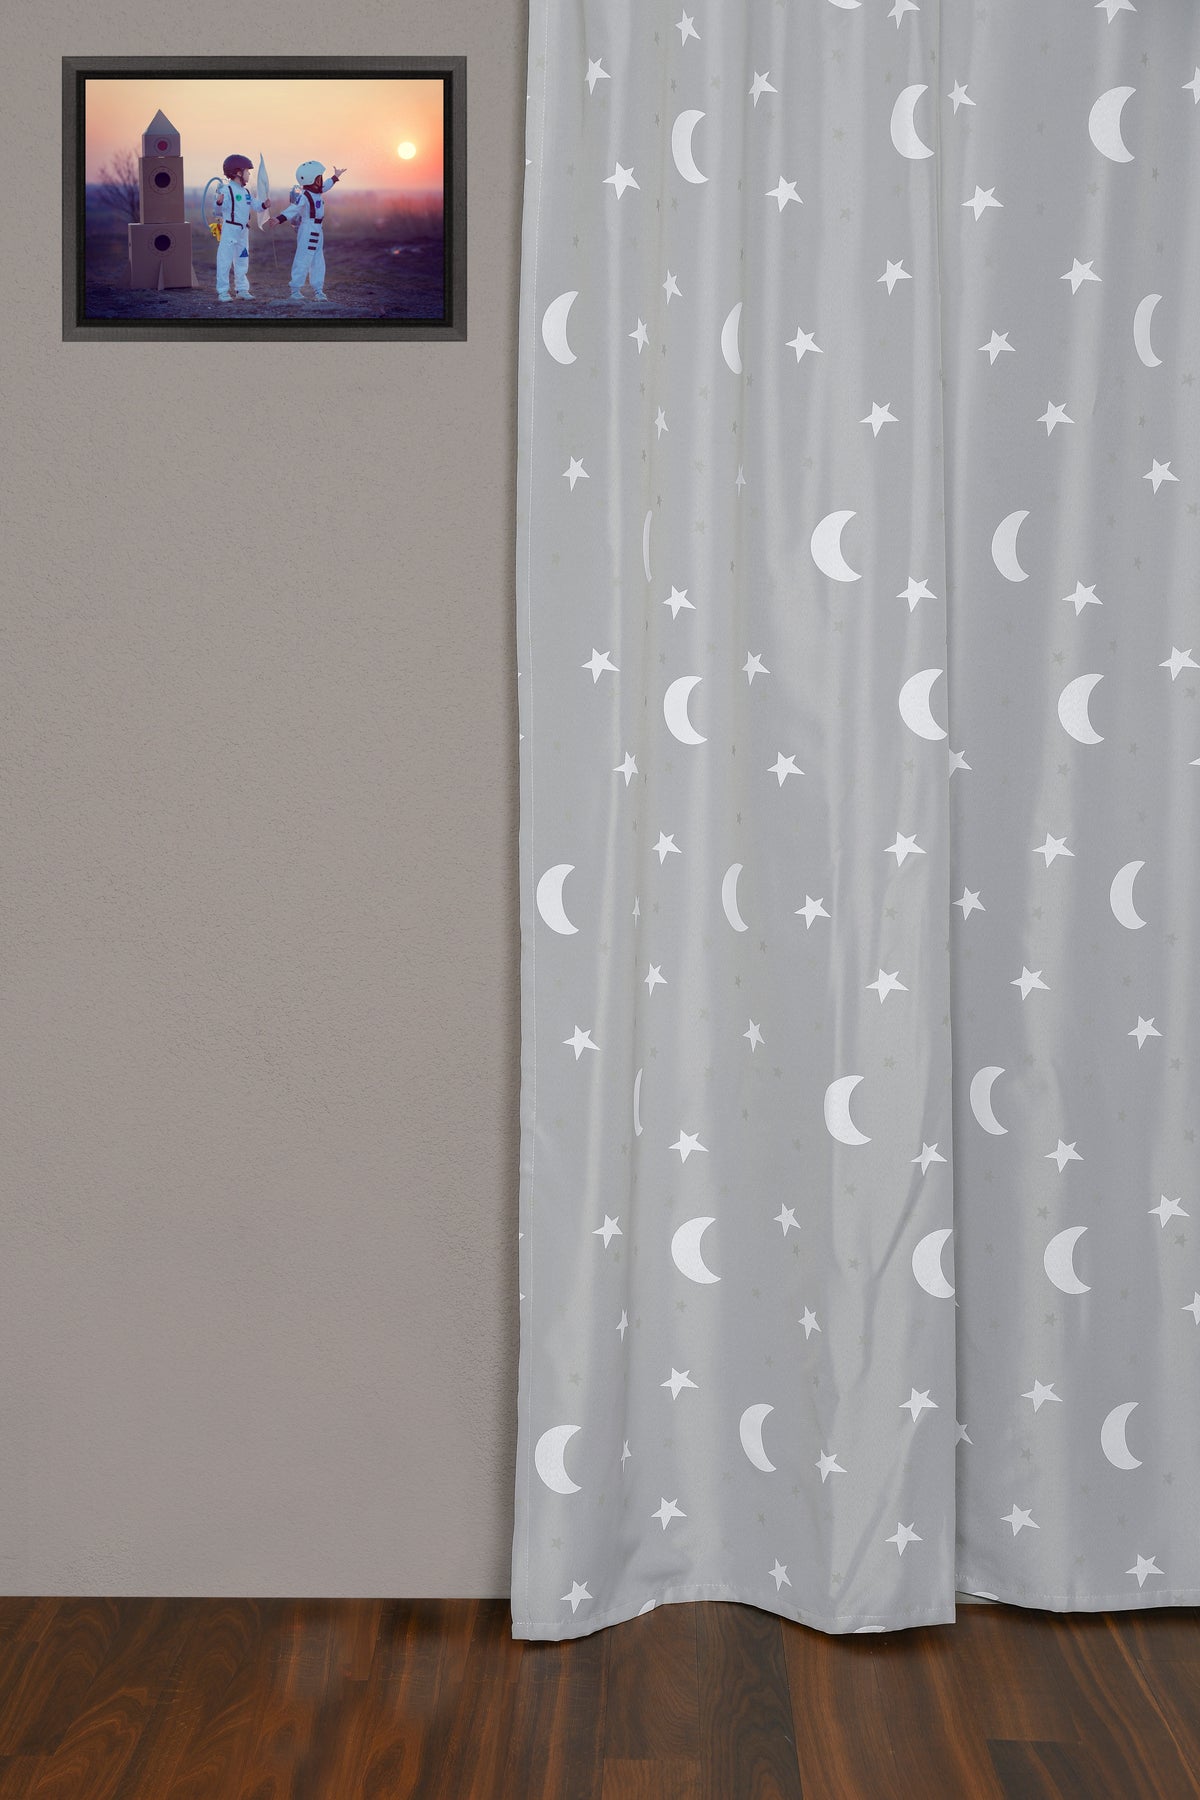 Night curtain silver Moon